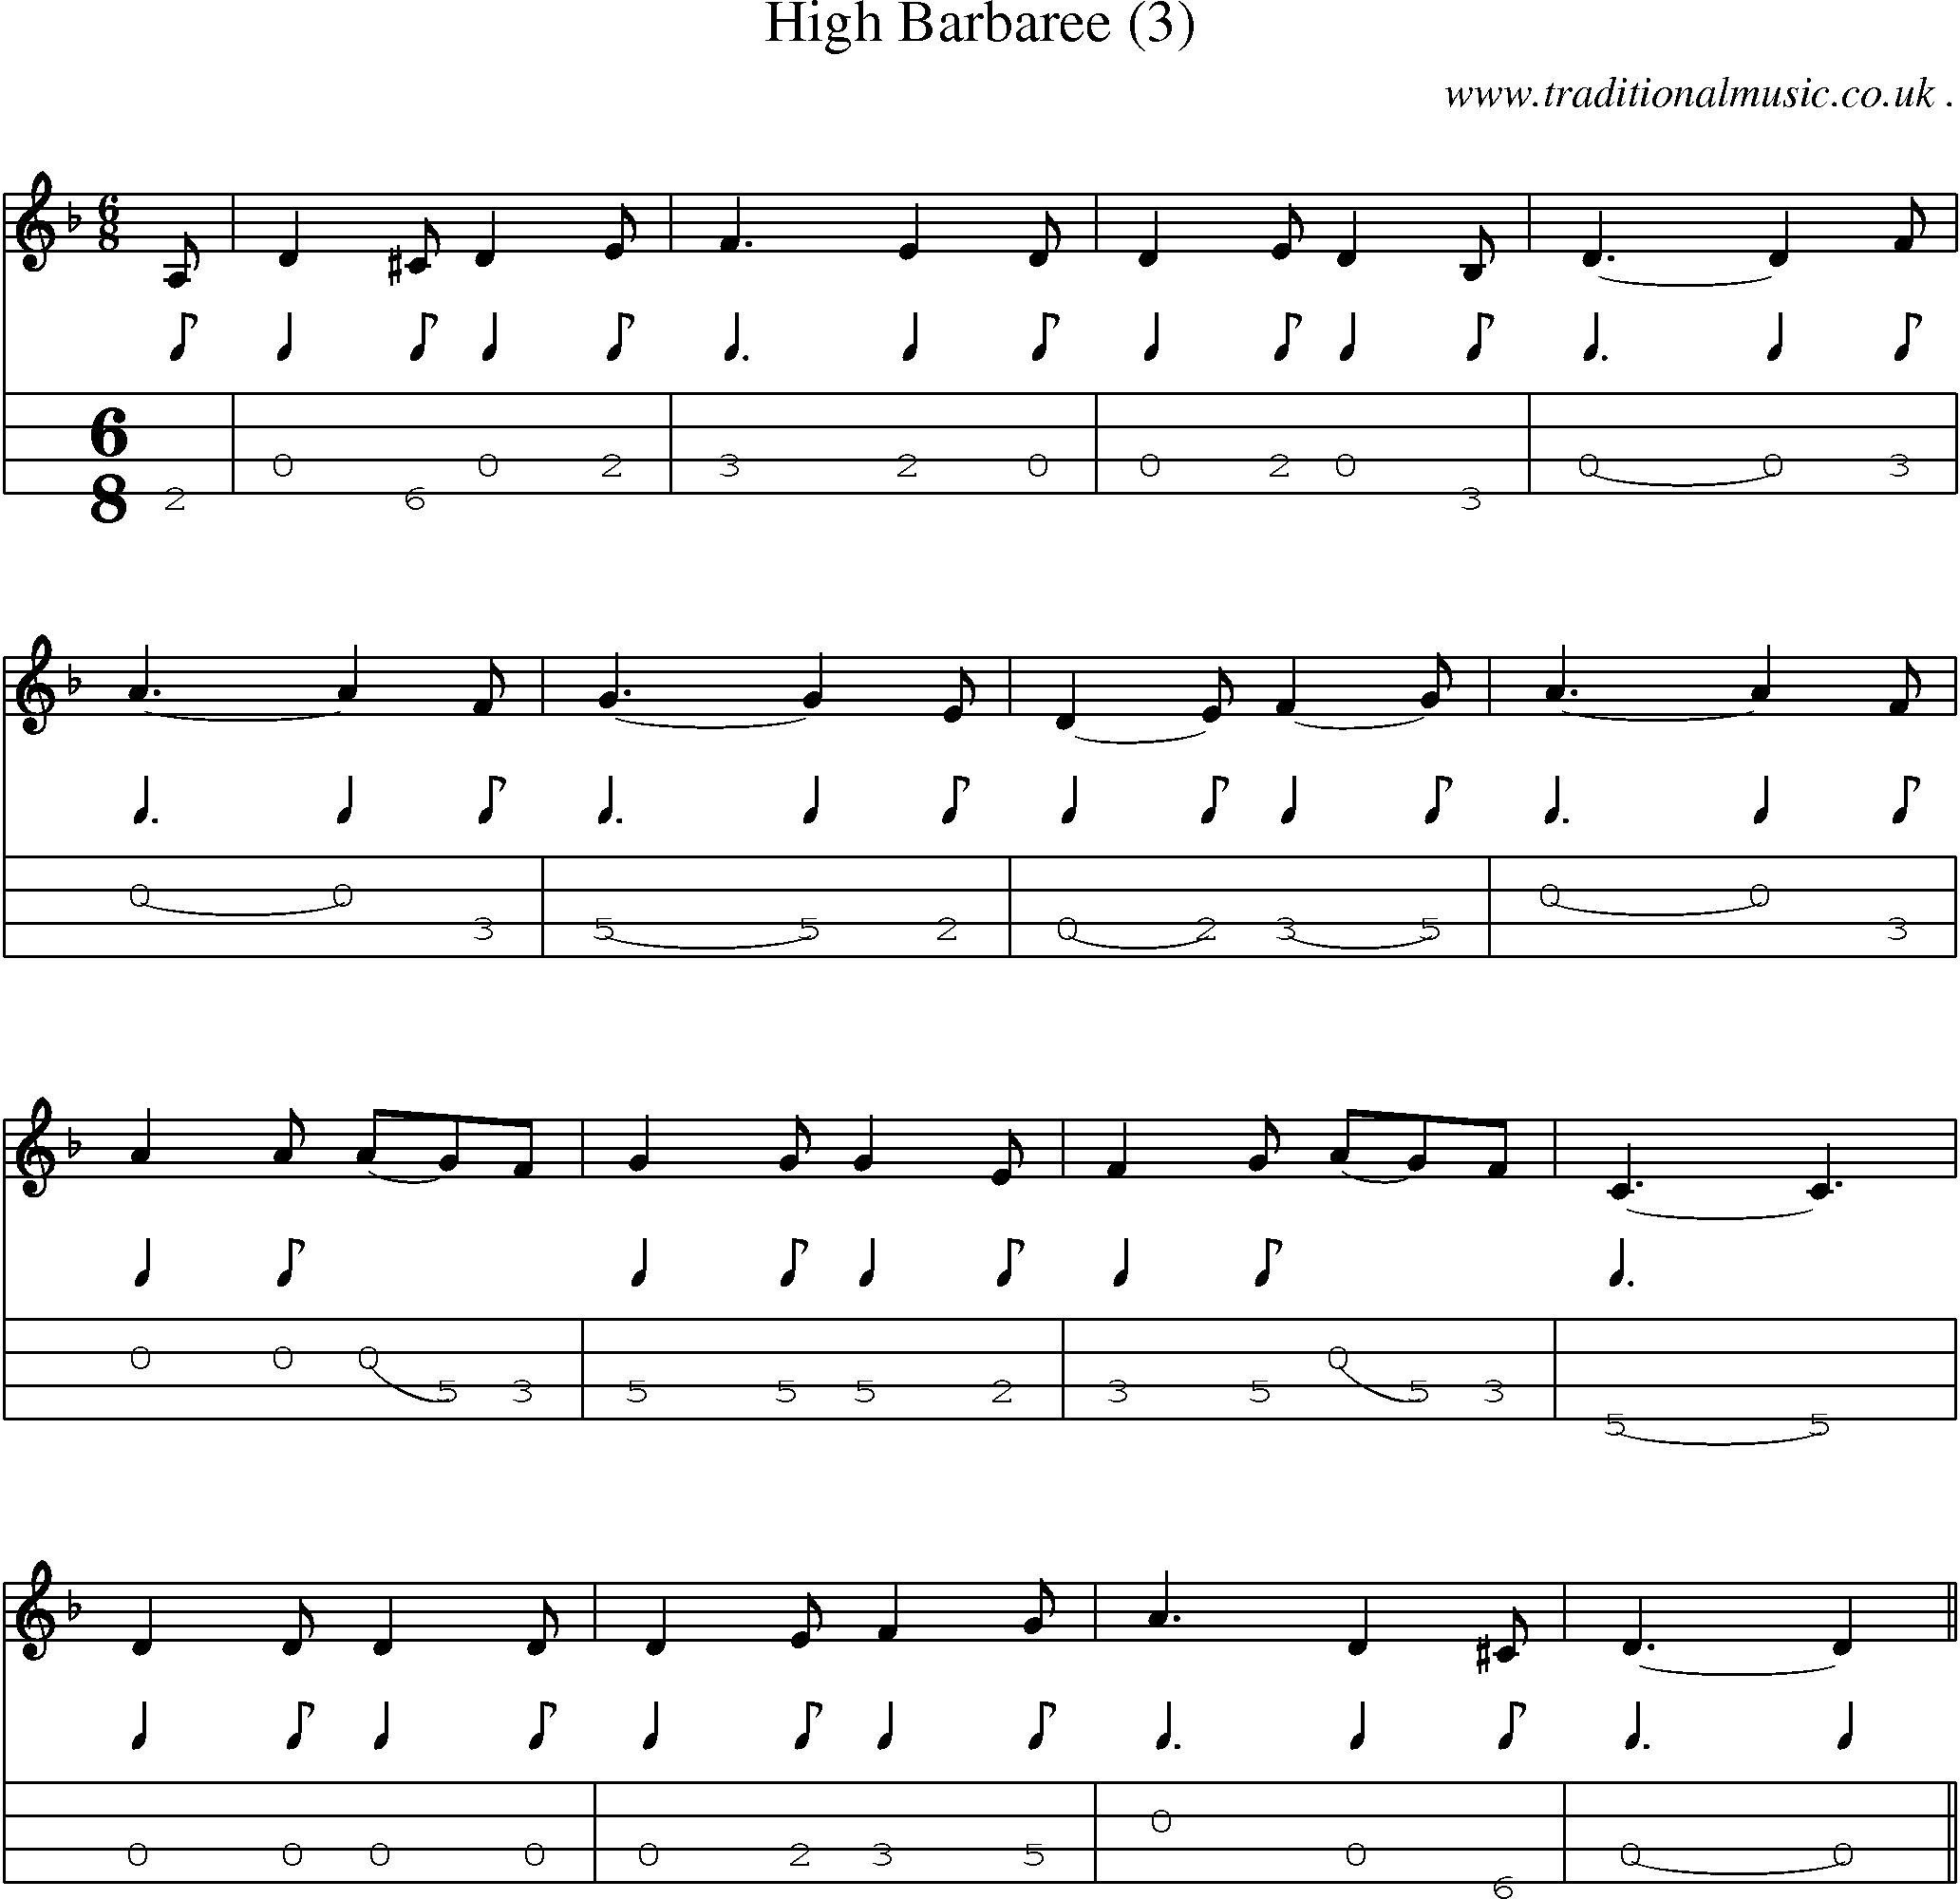 Sheet-Music and Mandolin Tabs for High Barbaree (3)